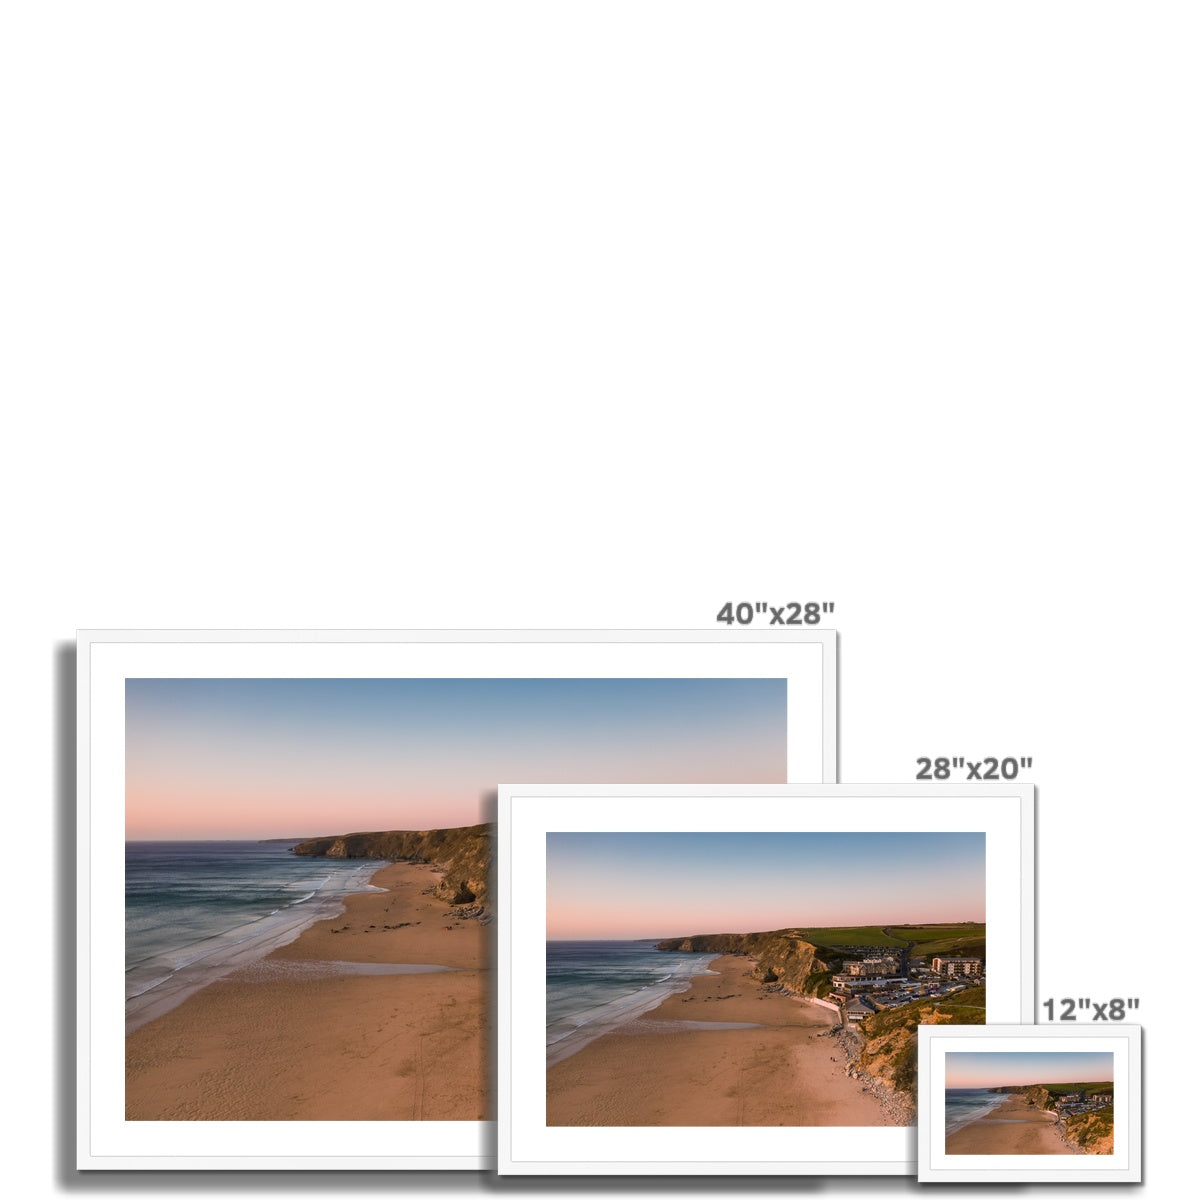 watergate bay frame sizes